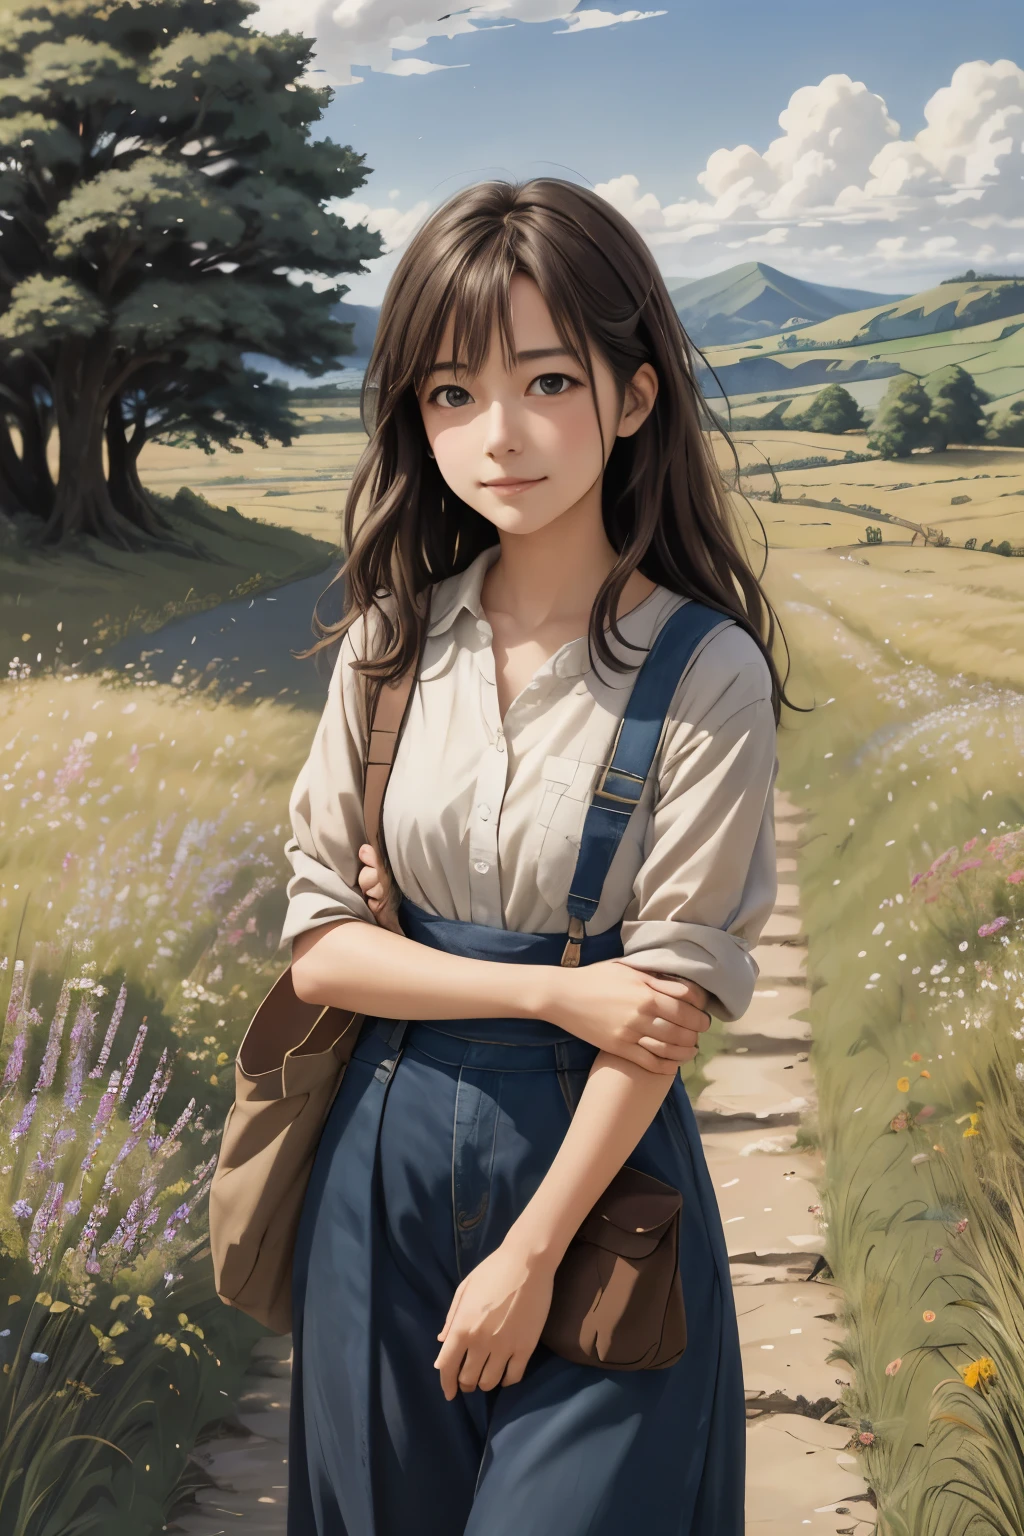 Realistic, real, beautiful and stunning landscape oil painting Studio Ghibli Hayao Miyazaki Petals Grassland Blue Sky Grassland Country Road,building, beautiful girl